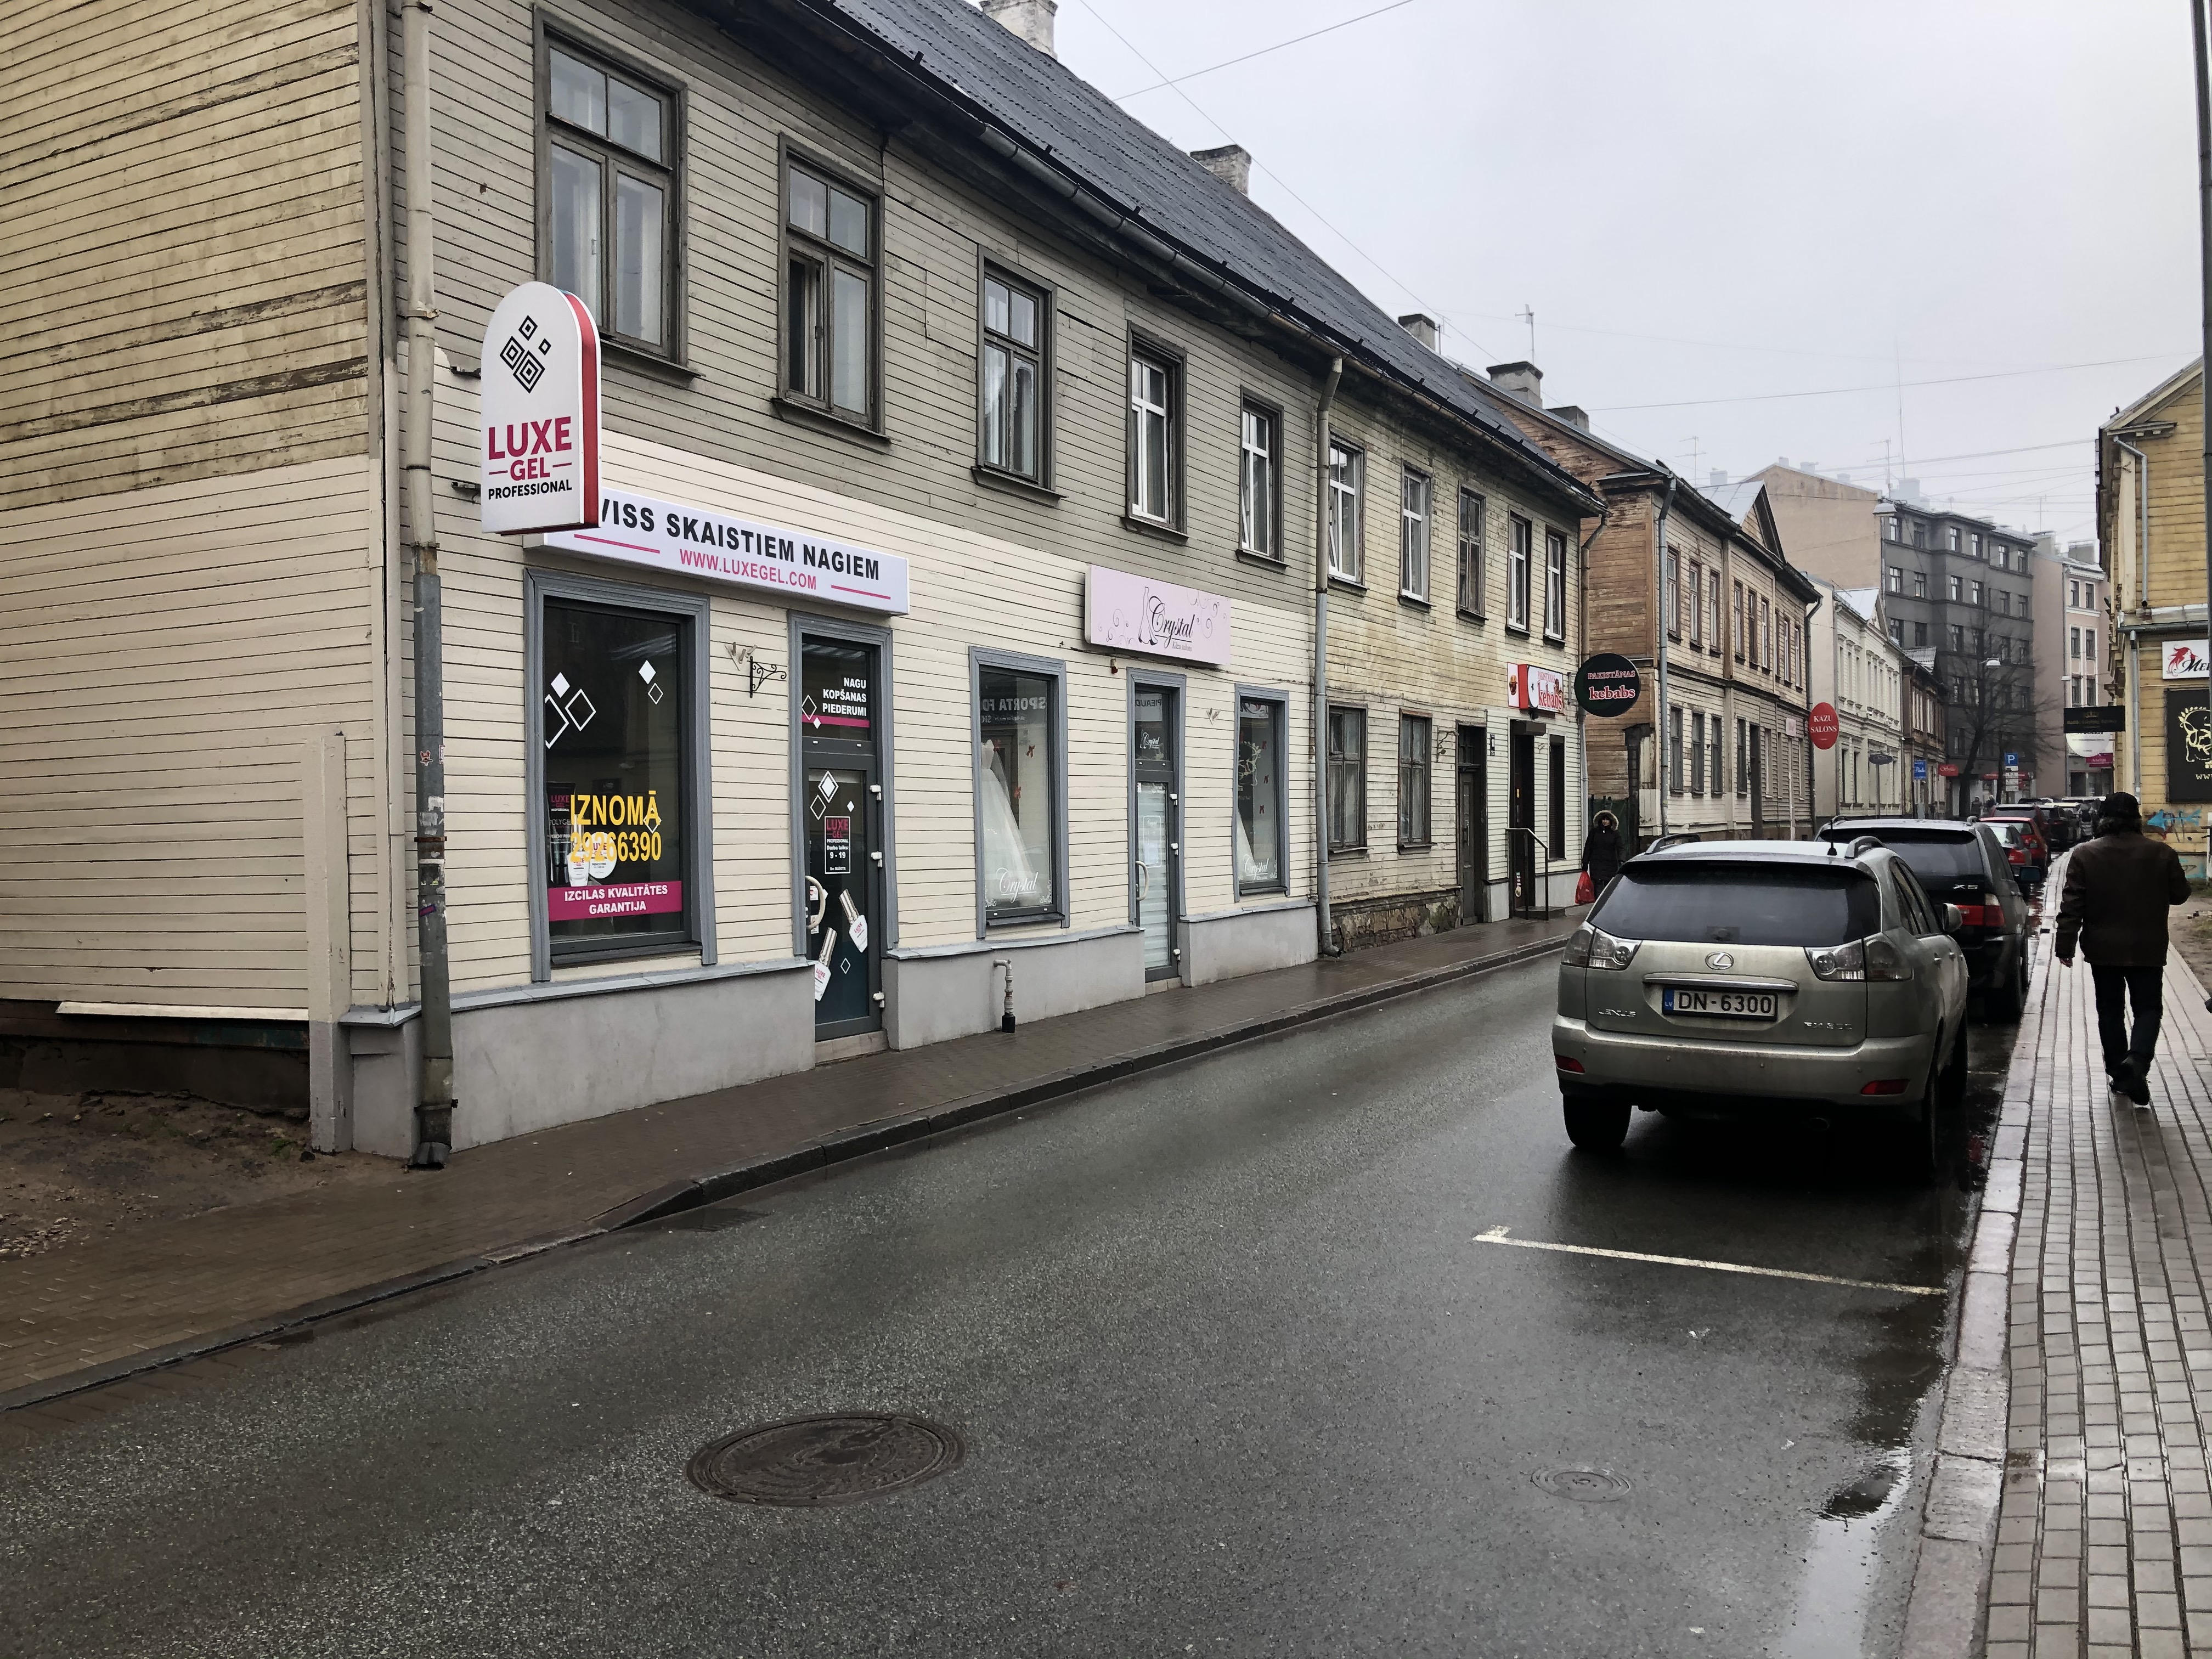 Retail premises for rent, Avotu street - Image 1